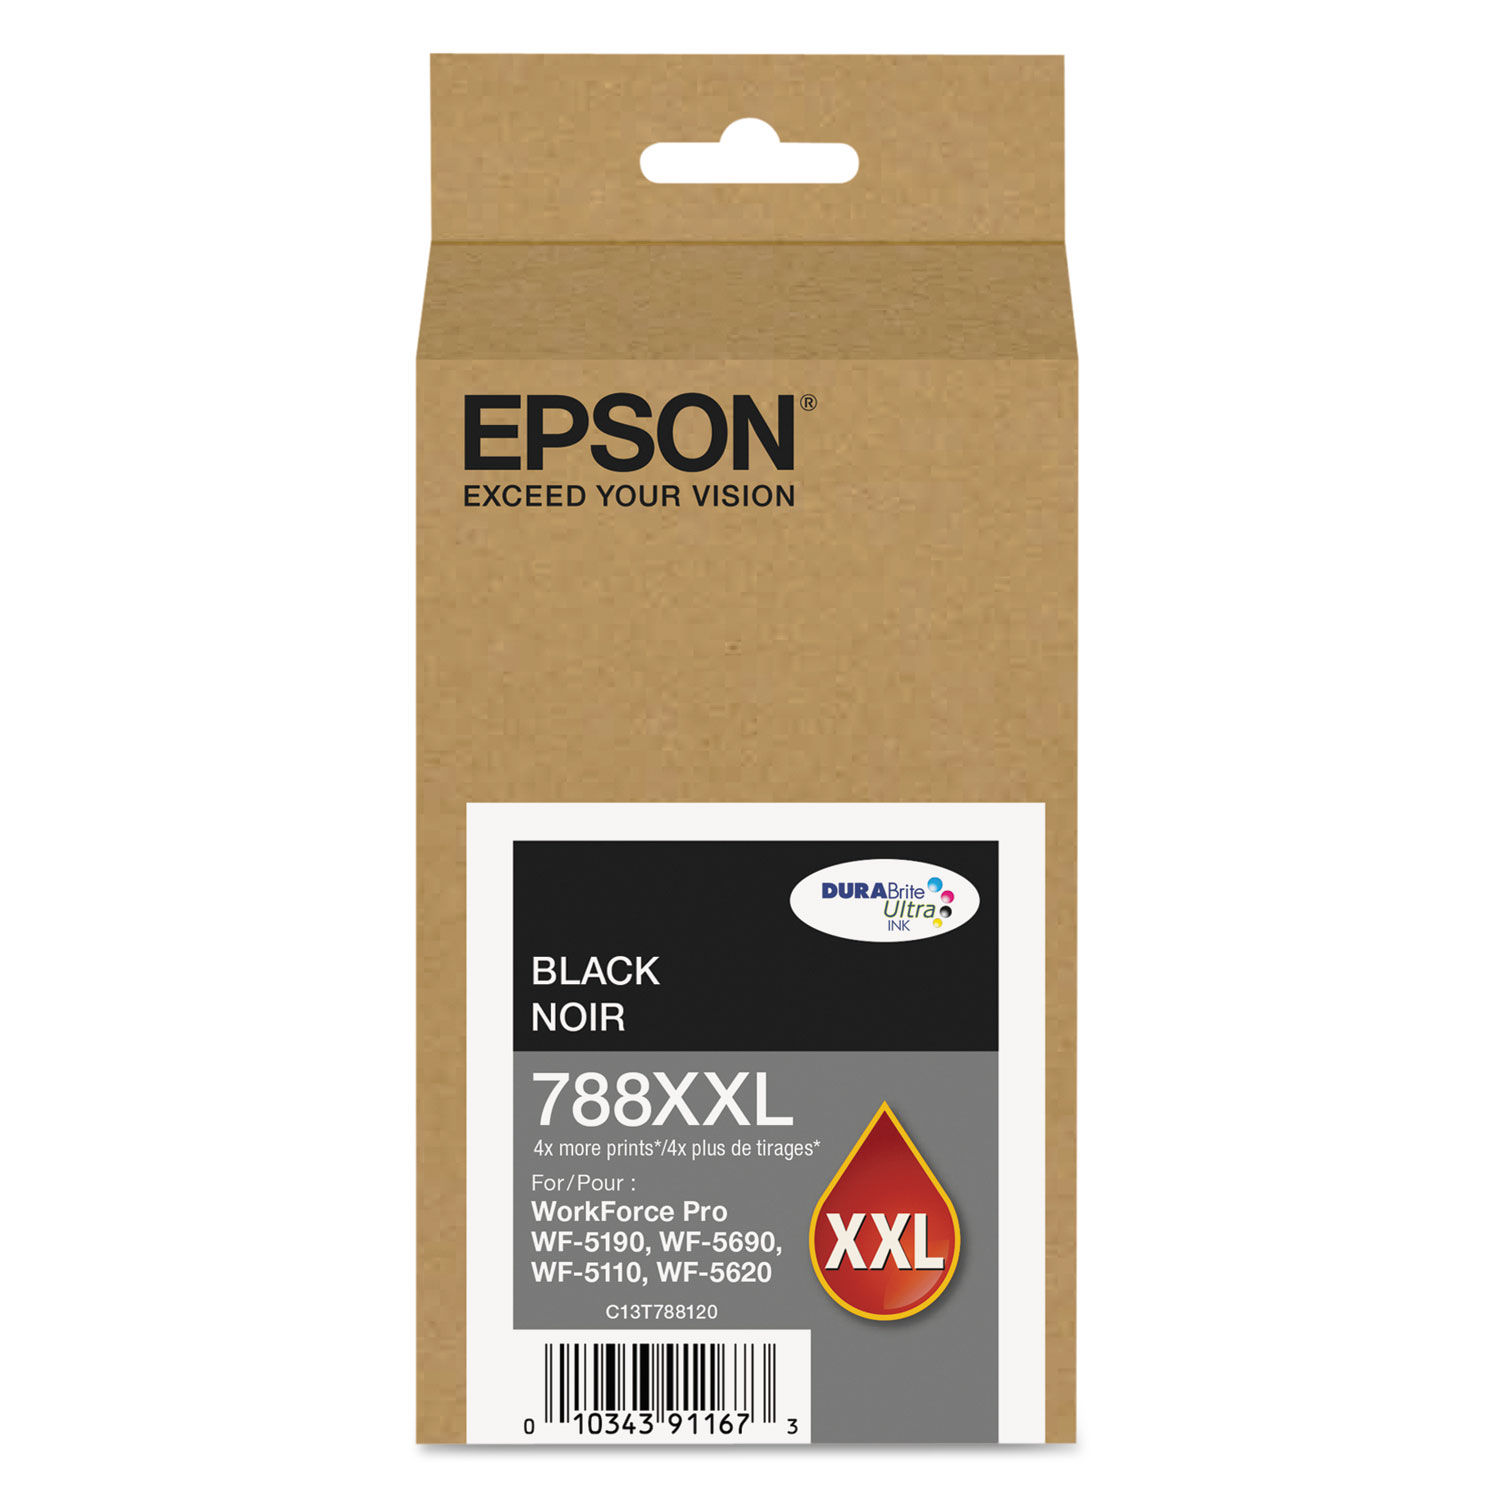  Epson T788XXL120 T788XXL120 (788XXL) DURABrite Ultra XL PRO High-Yield Ink, Black (EPST788XXL120) 